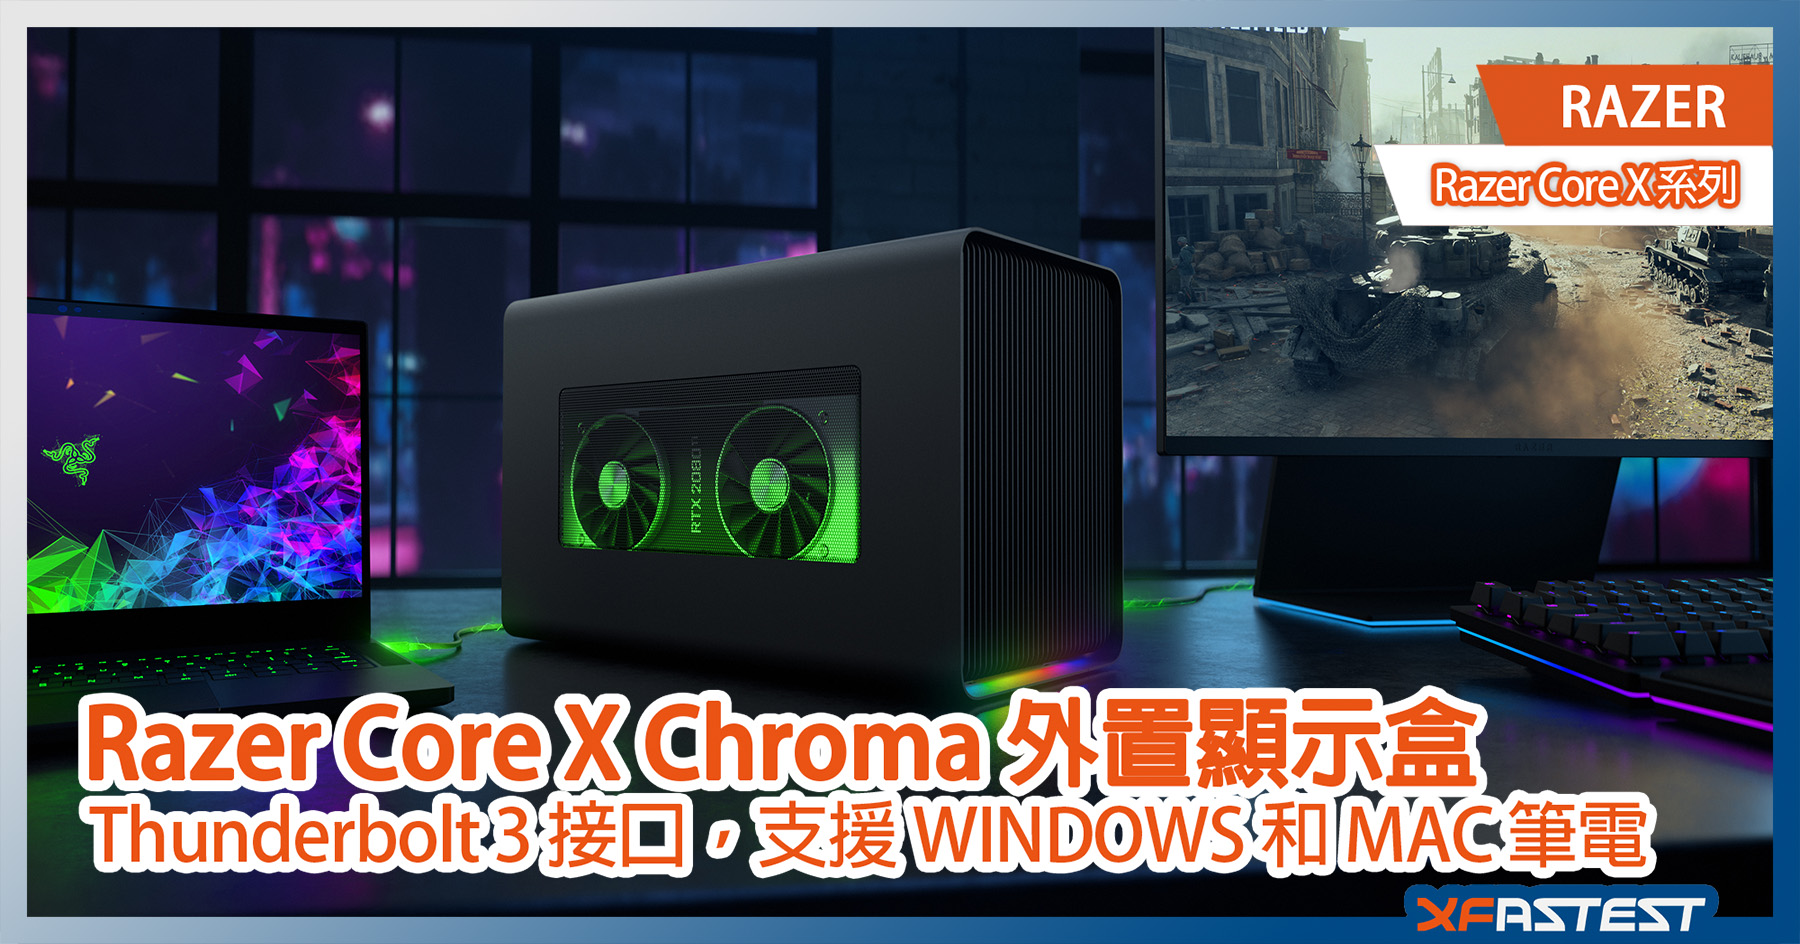 Razer Core X Chroma Windows/Mac対応 使用僅か